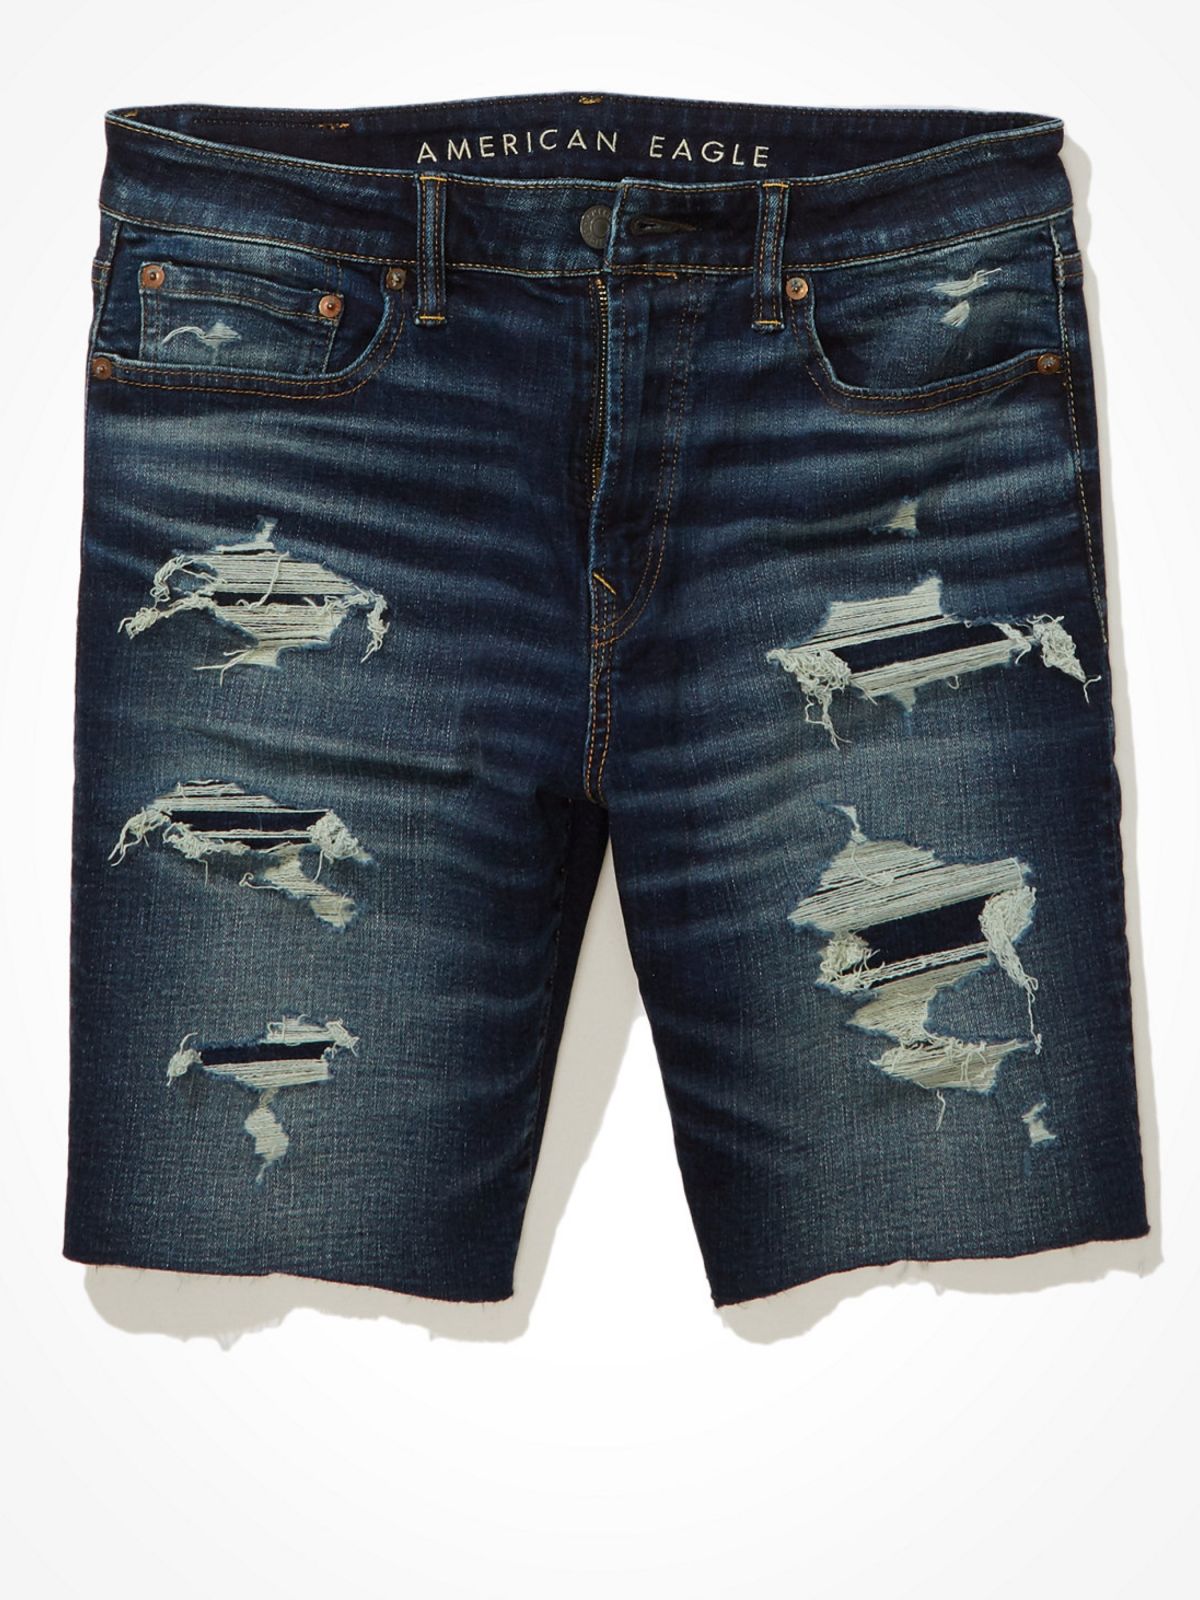  ג'ינס קצר ווש עם קרעים של AMERICAN EAGLE